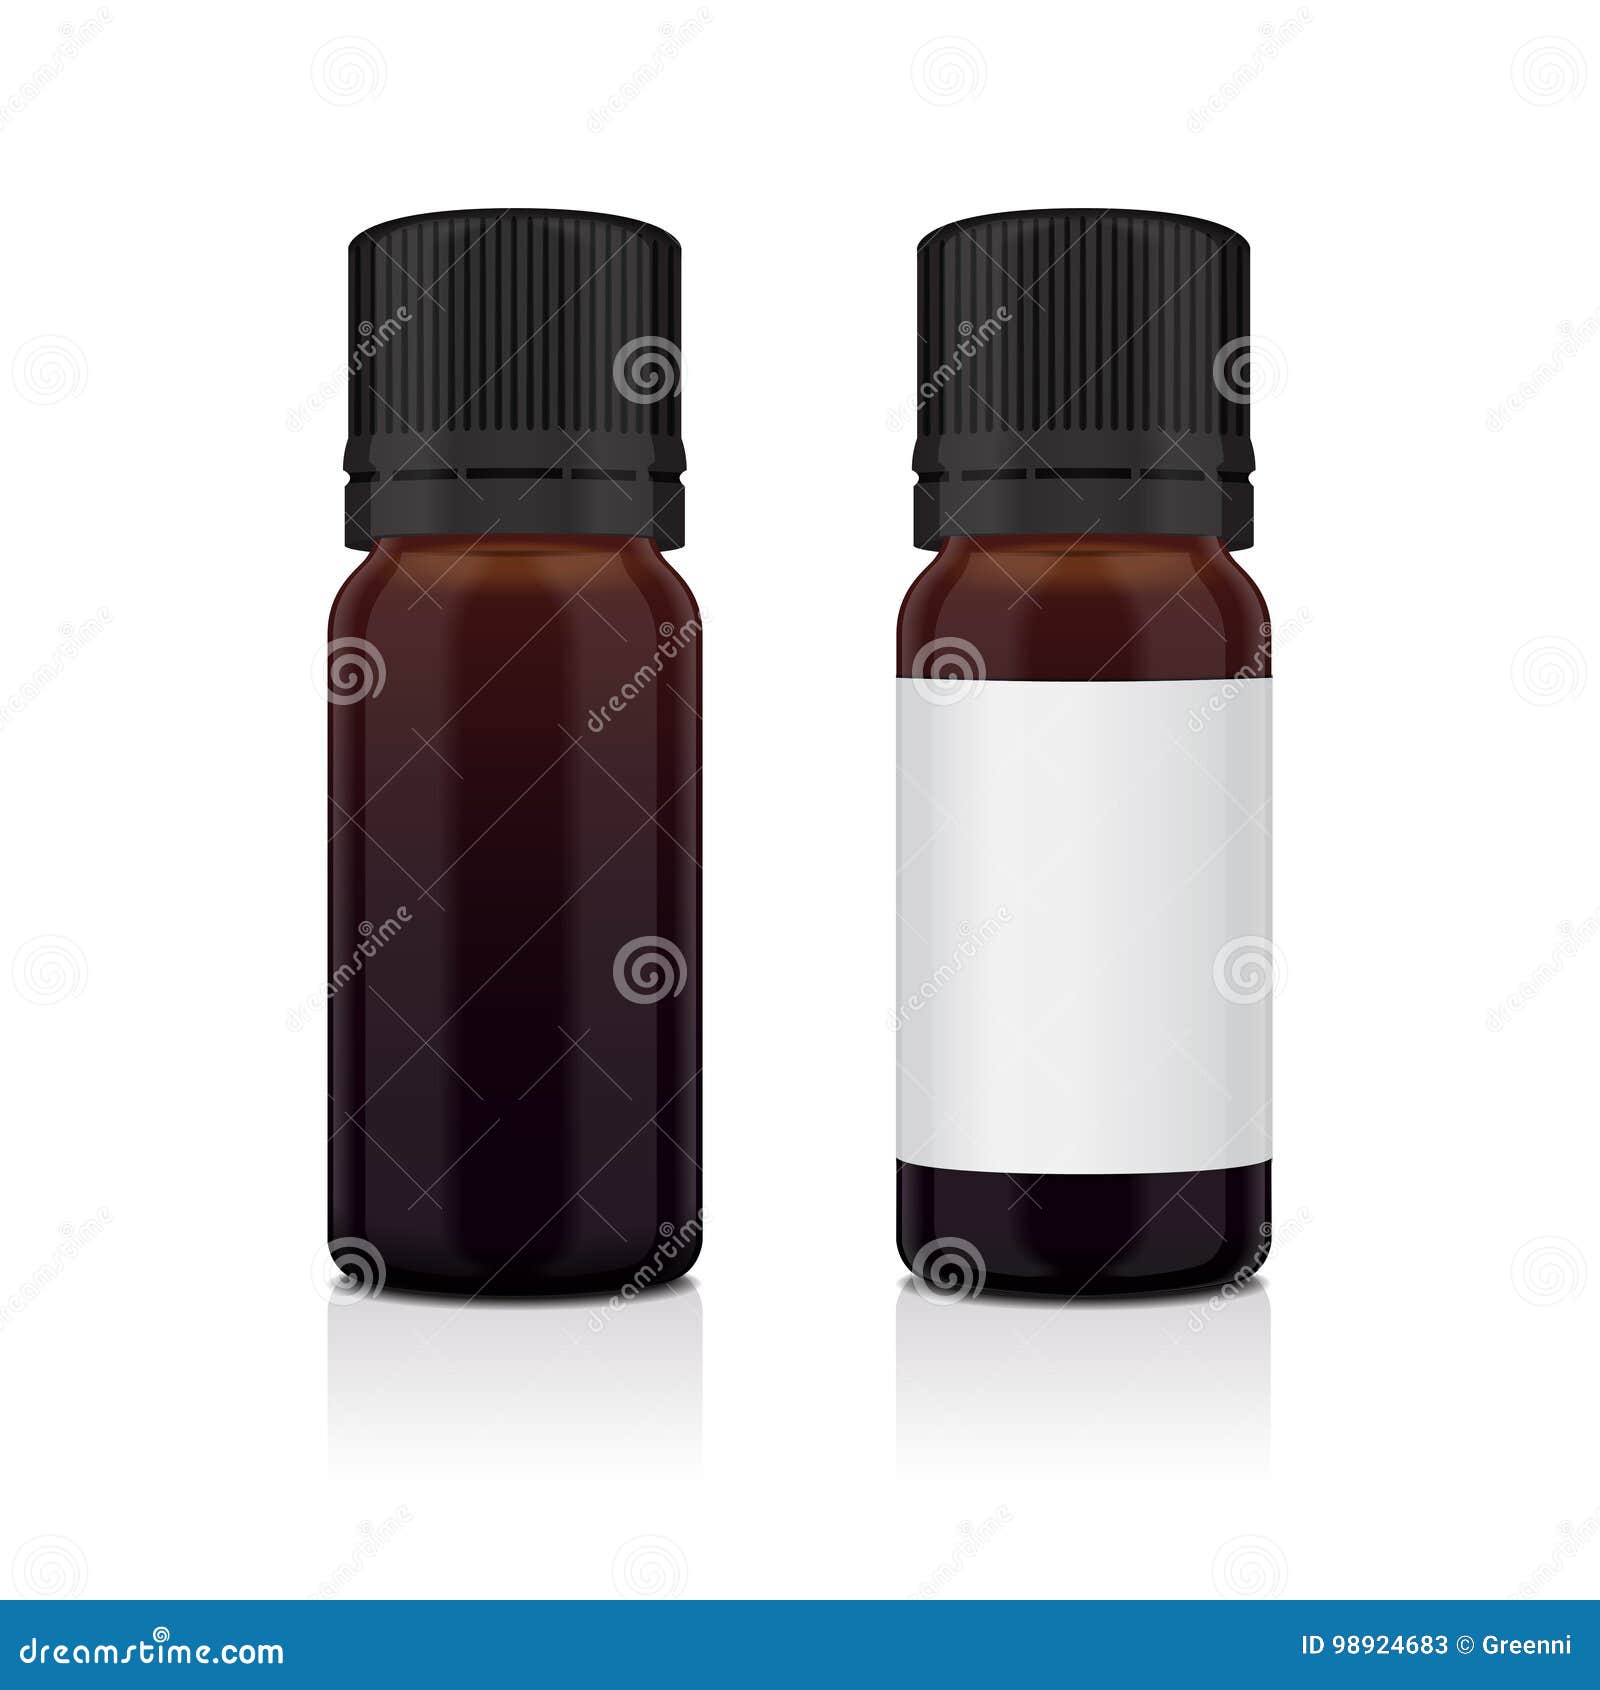 Download Set Of Realistic Essential Oil Brown Bottle Mock Up Bottle Cosmetic Or Medical Vial Flask Flacon 3d Illustration Stock Vector Illustration Of Design Clear 98924683